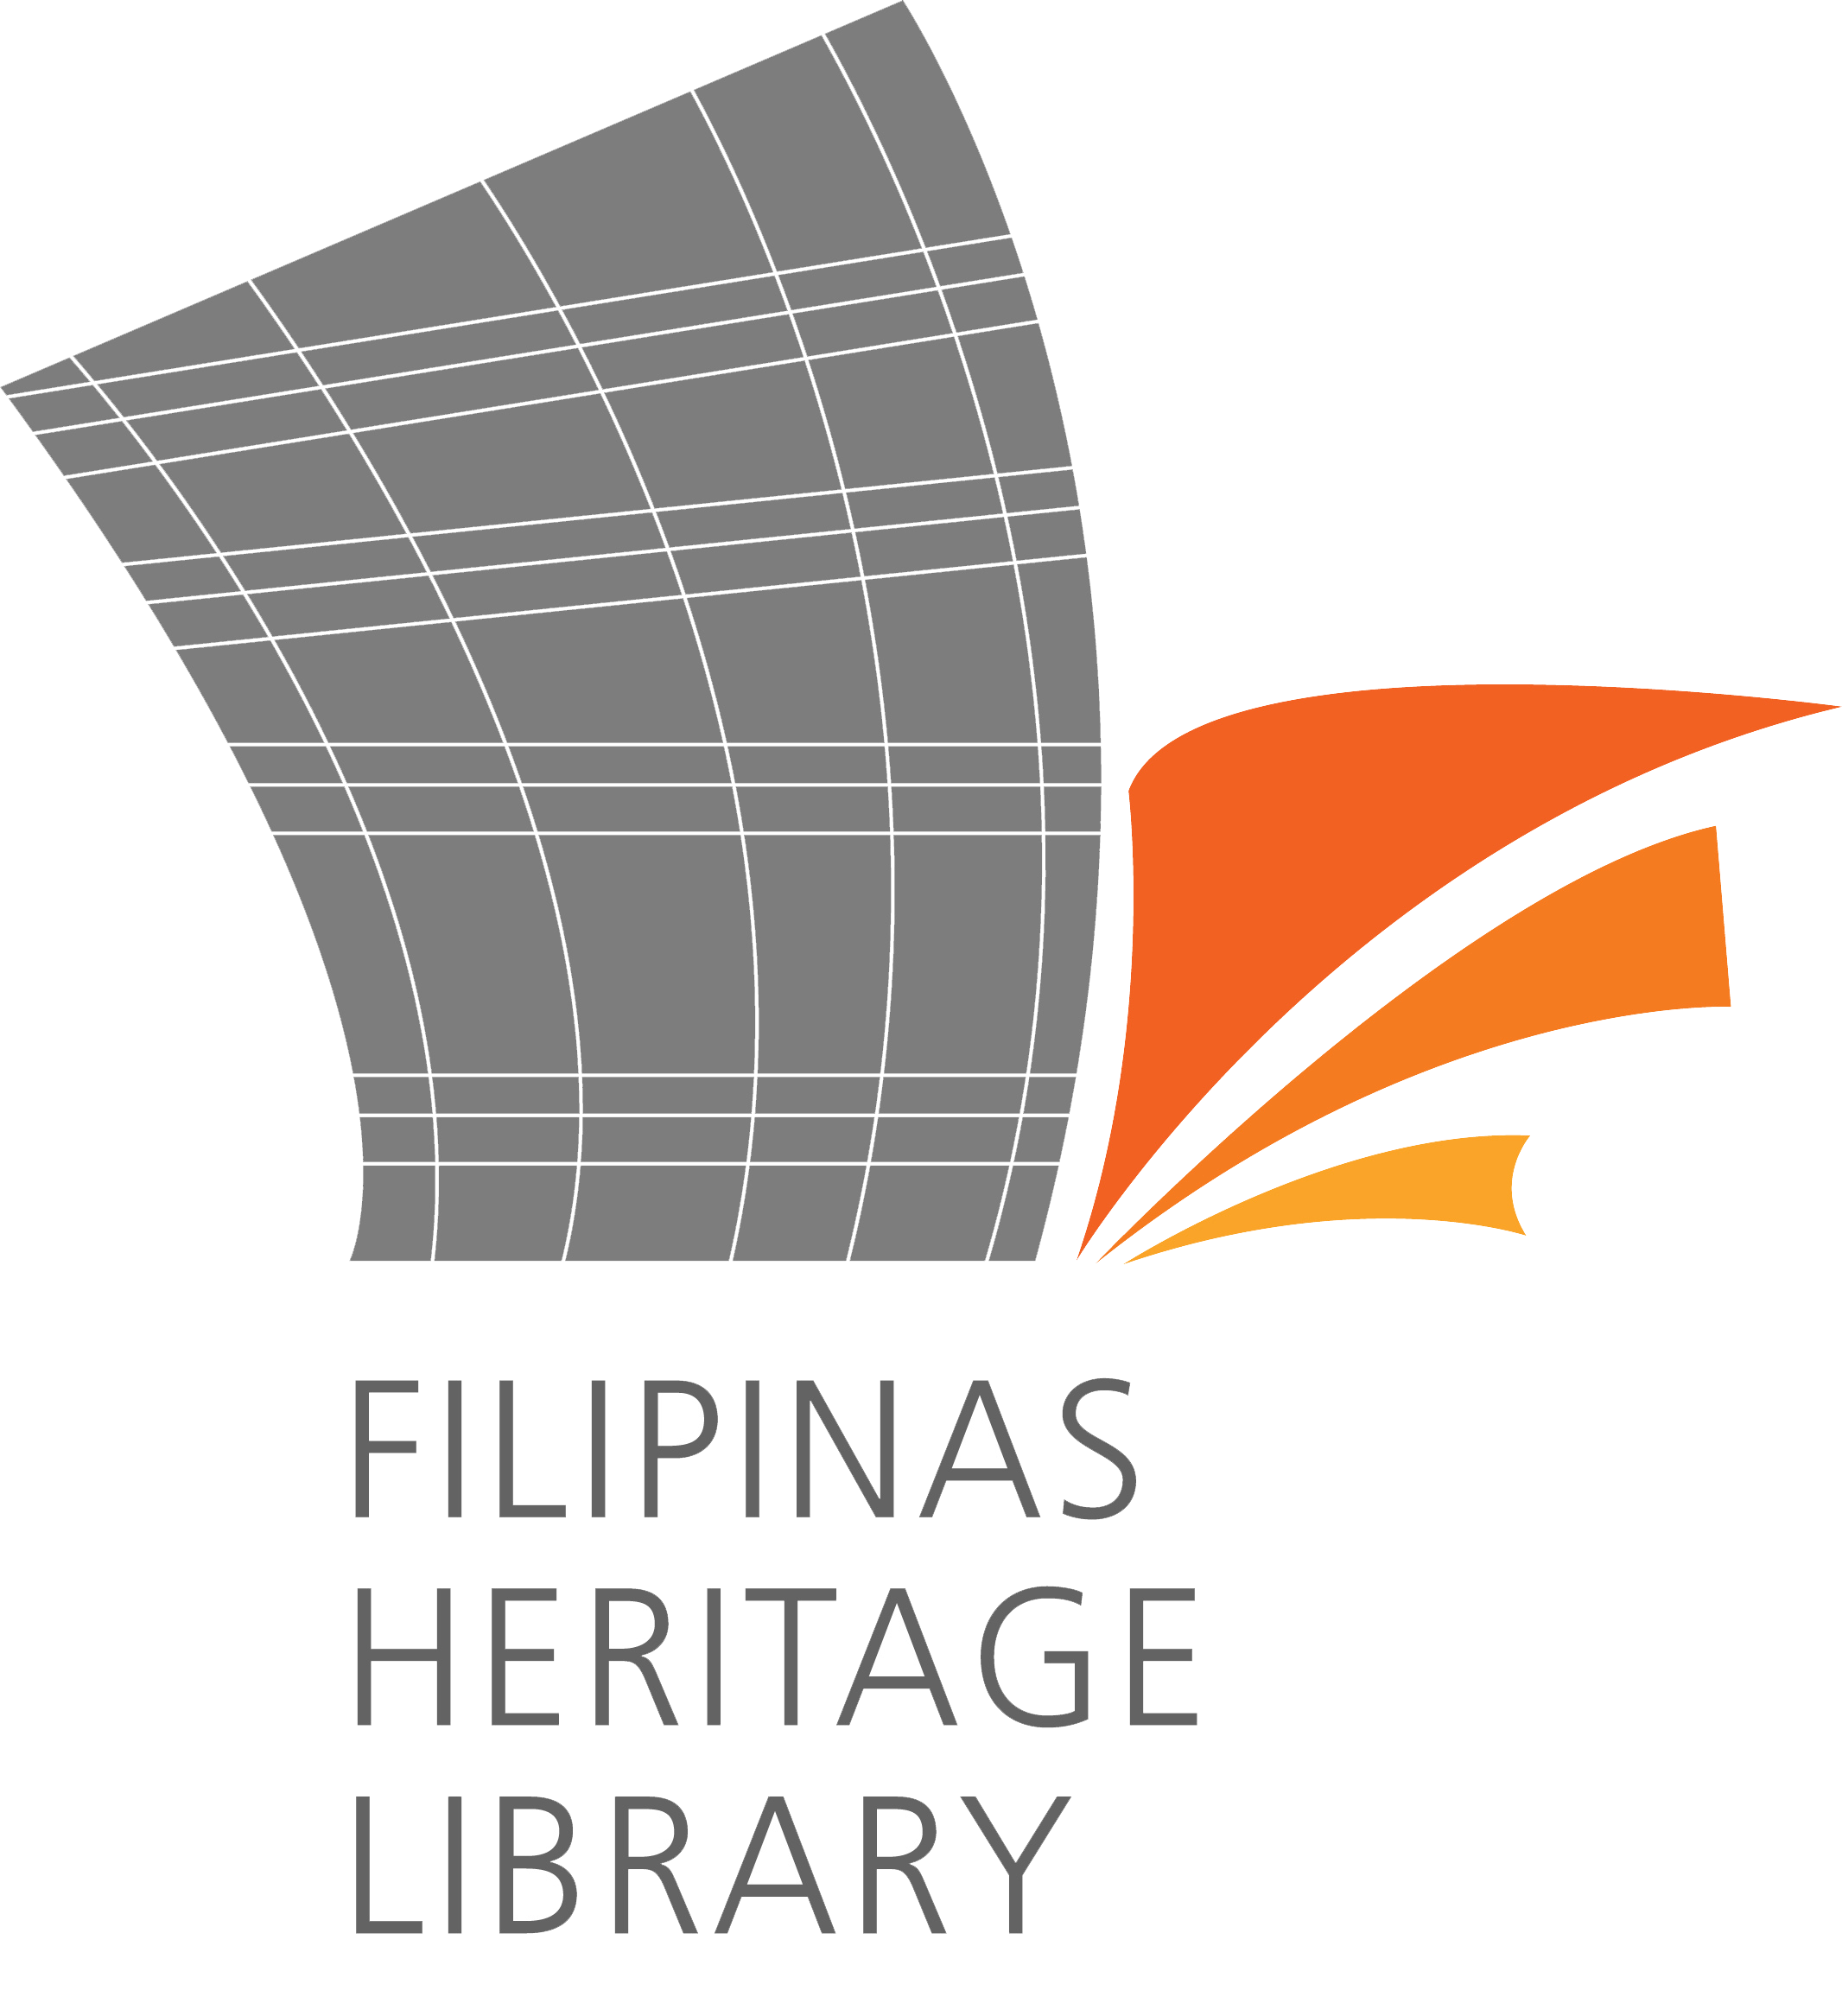 filipinas heritage library logo